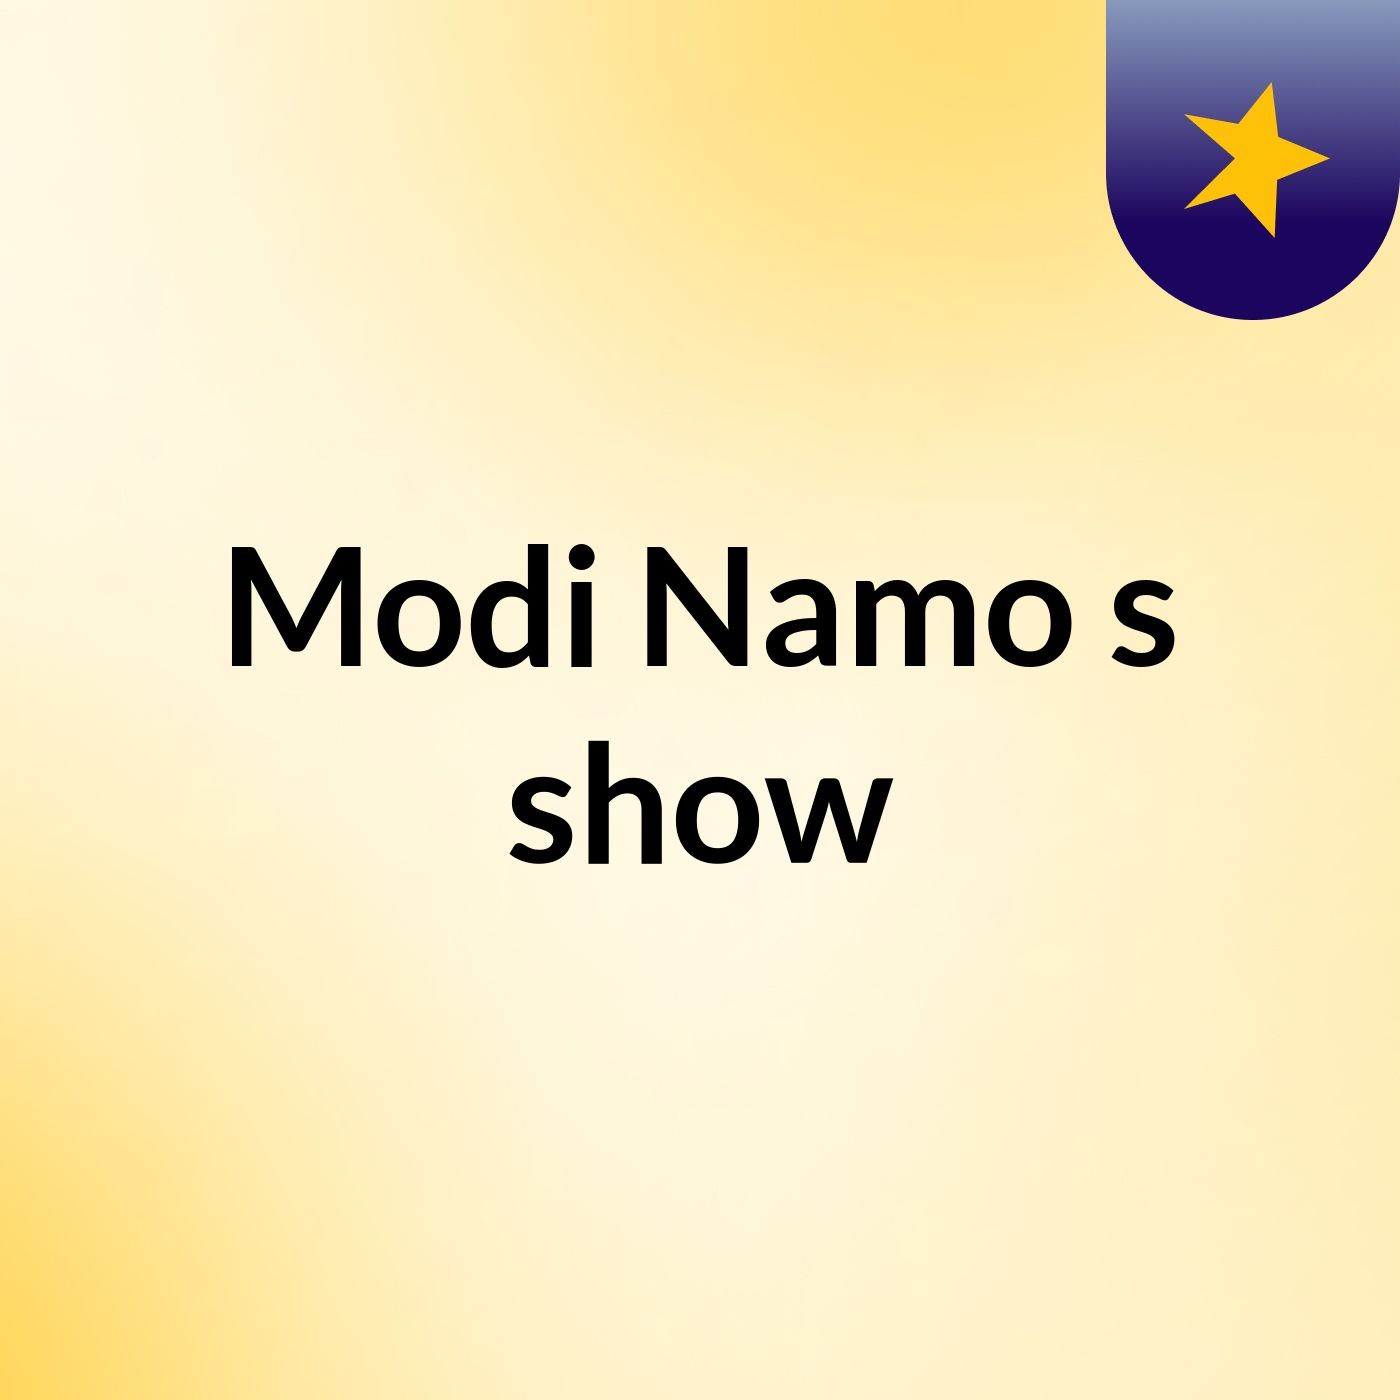 Modi Namo's show